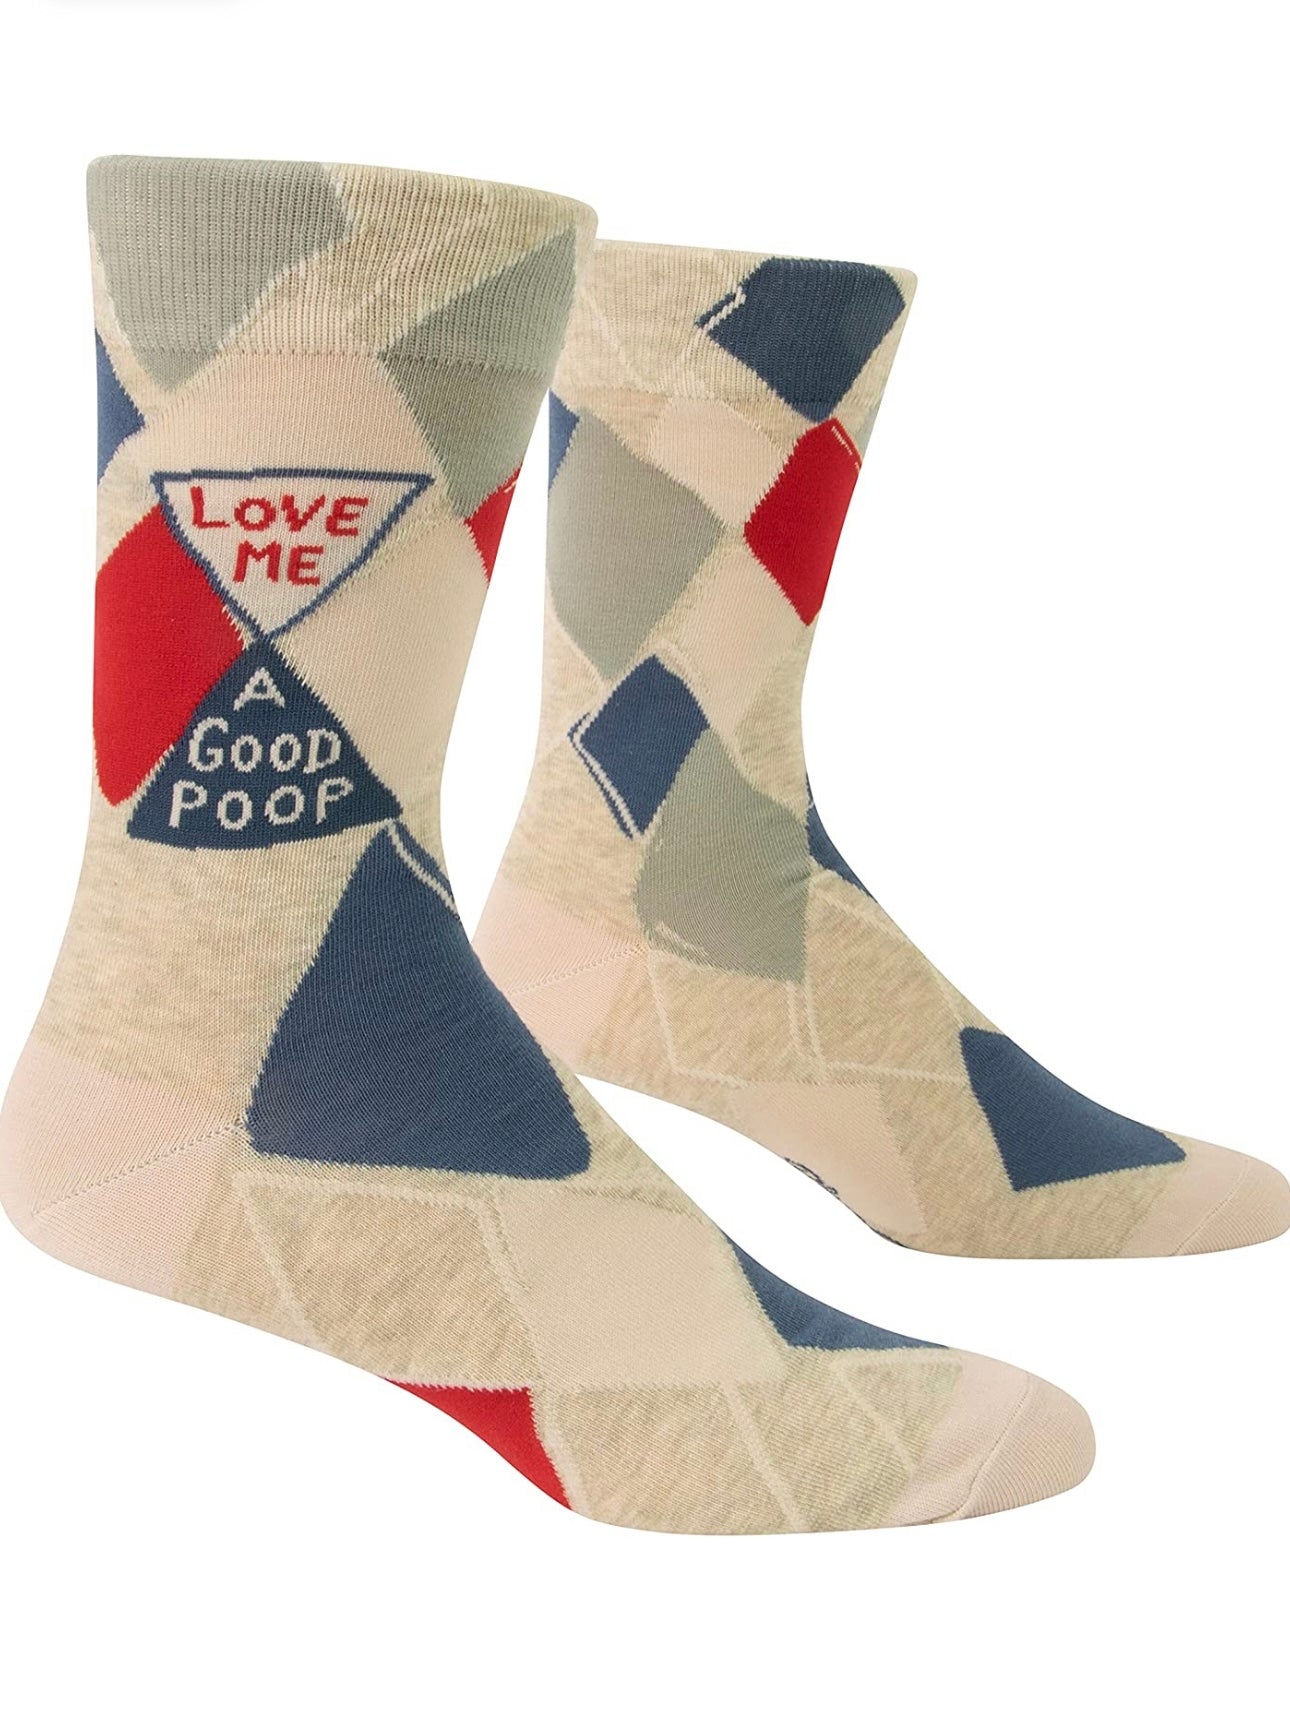 Love Me a Good Poop Men's Crew Novelty Socks